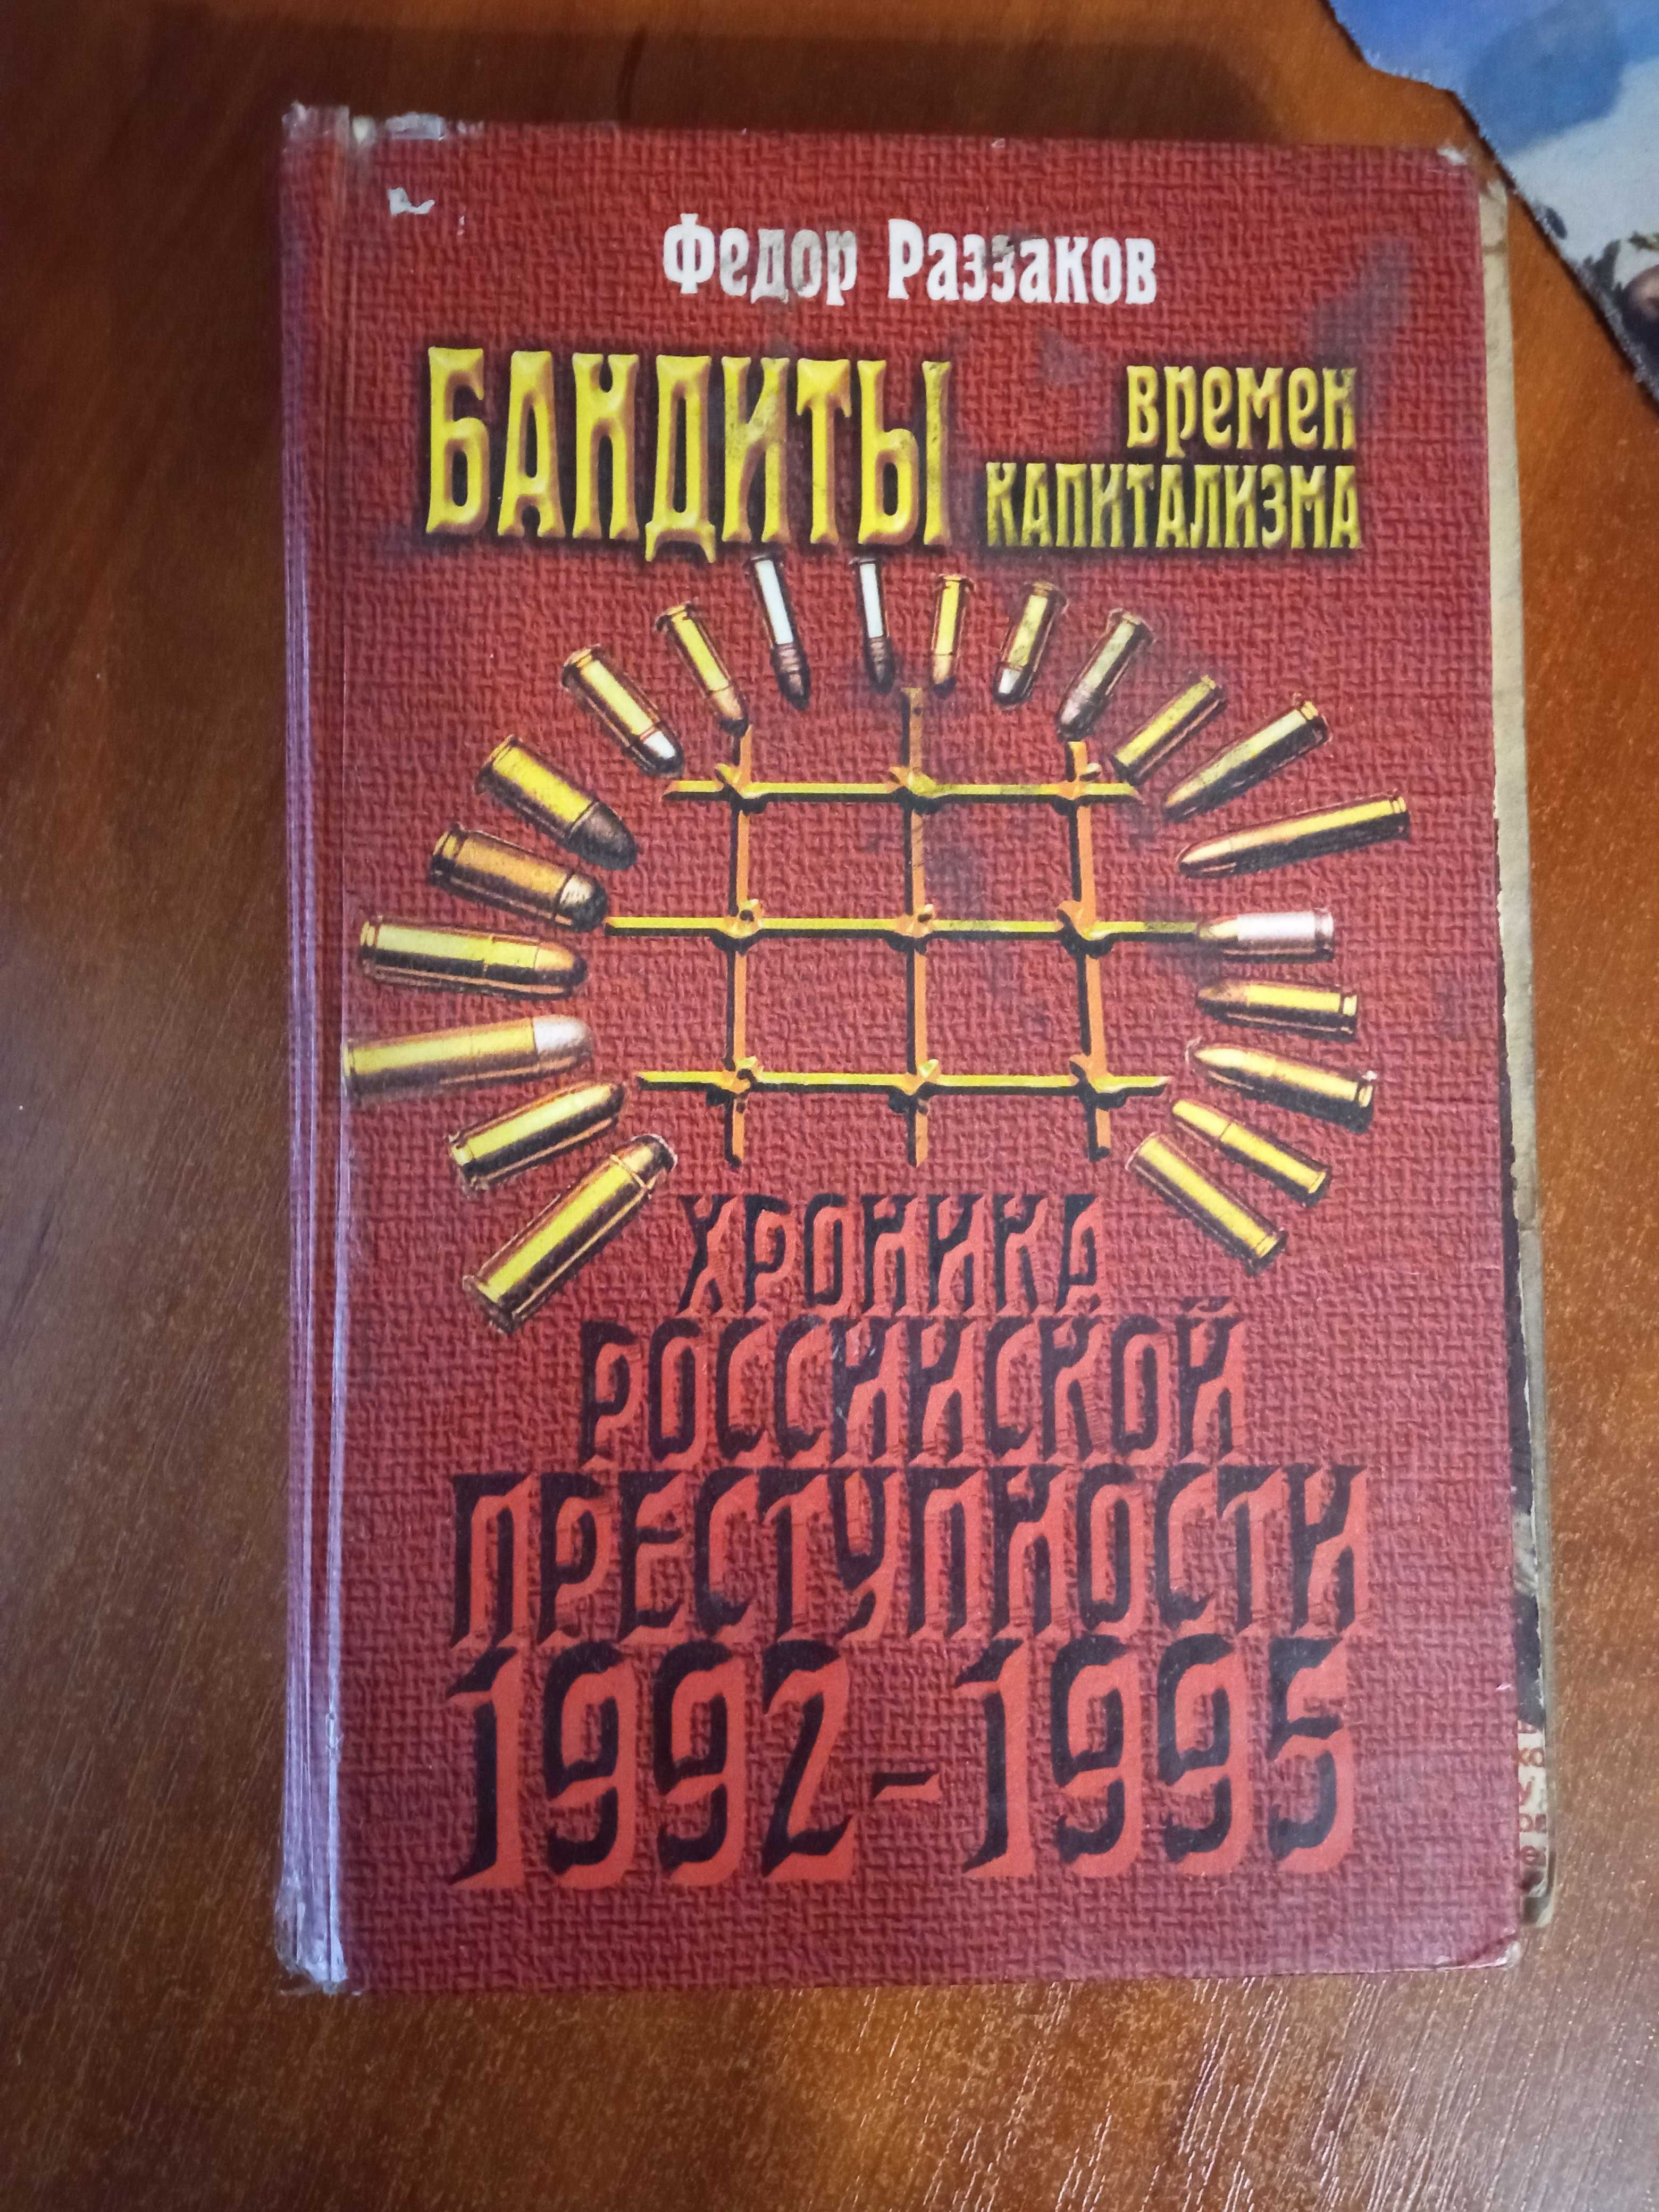 Книга "Бандиты времен капитализма"Федор Раззаков.